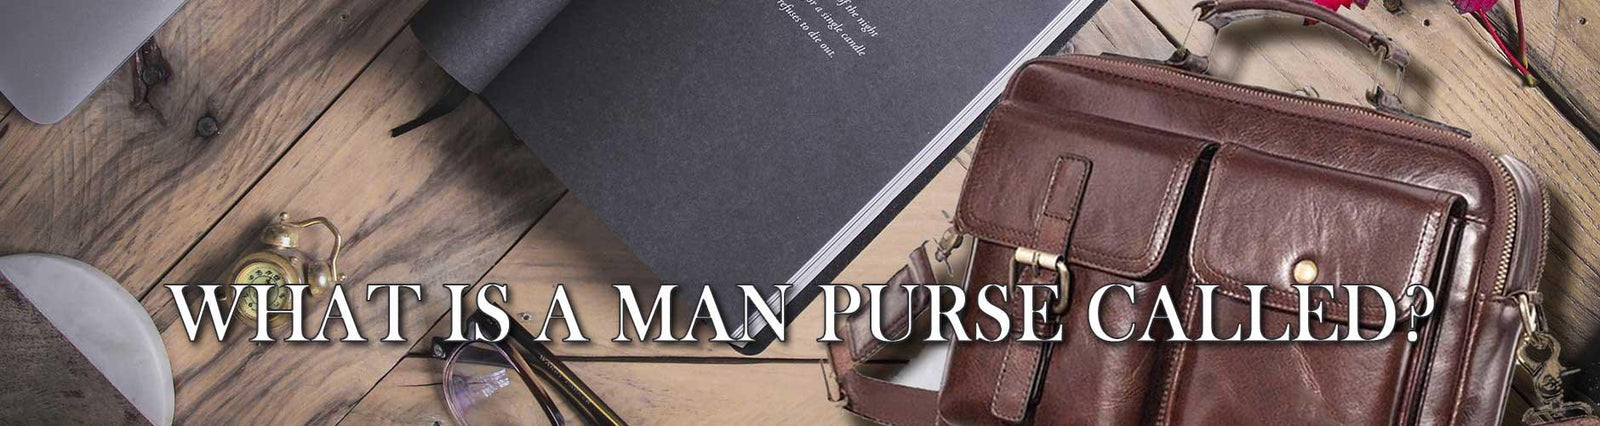 What is a Man Purse Called? - Man Purse Co